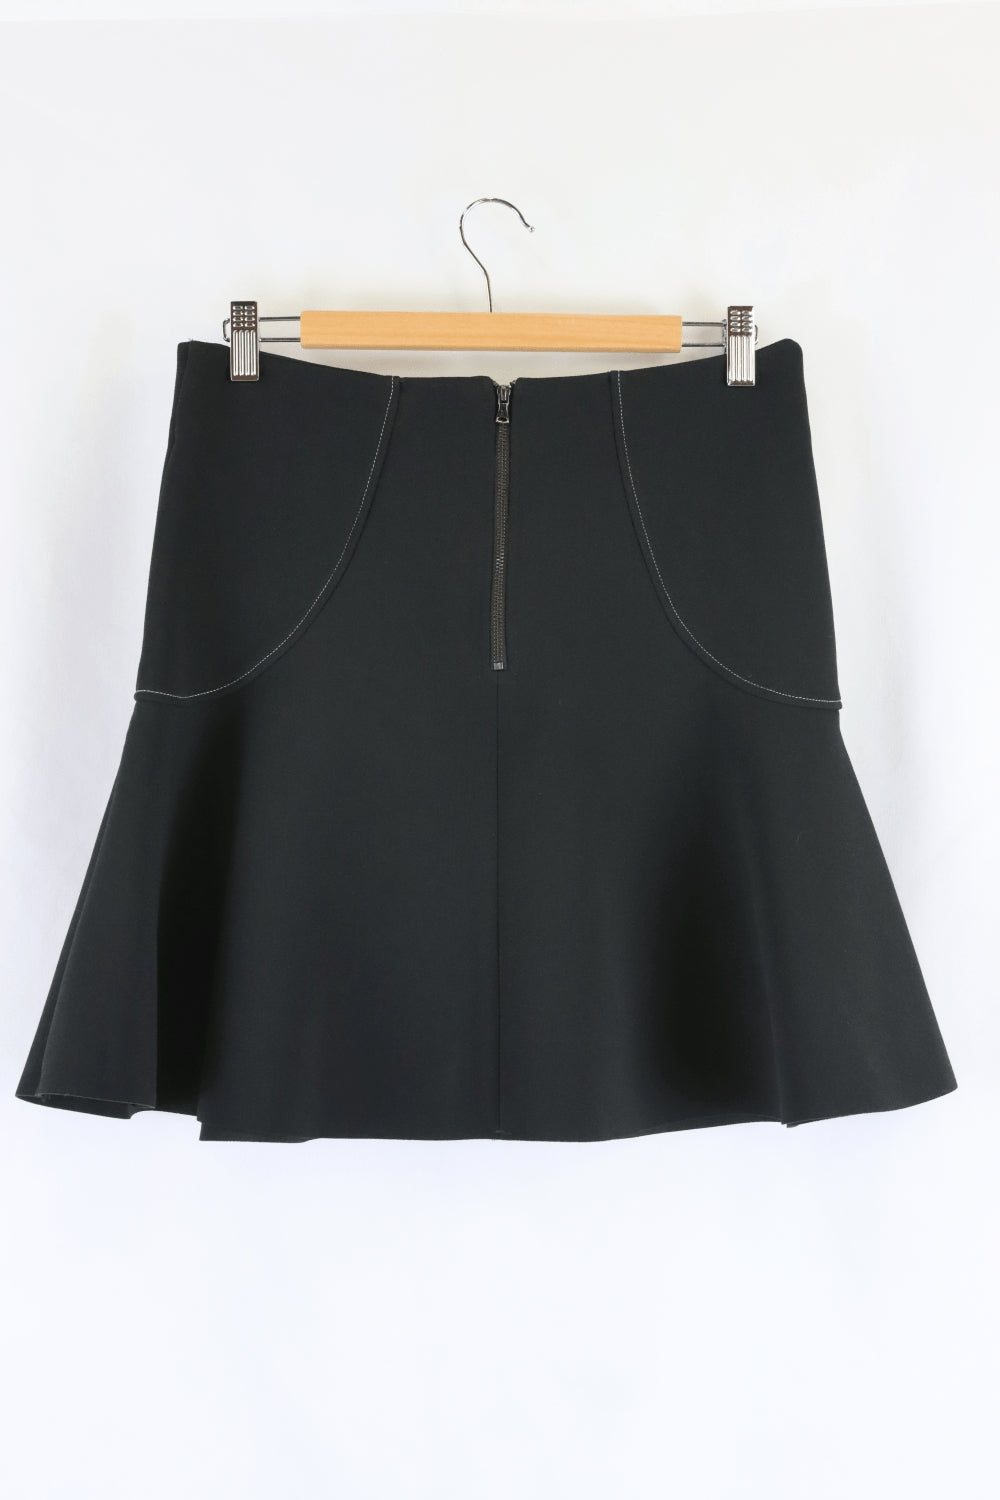 Next Skirts Black Mini Skirt 10